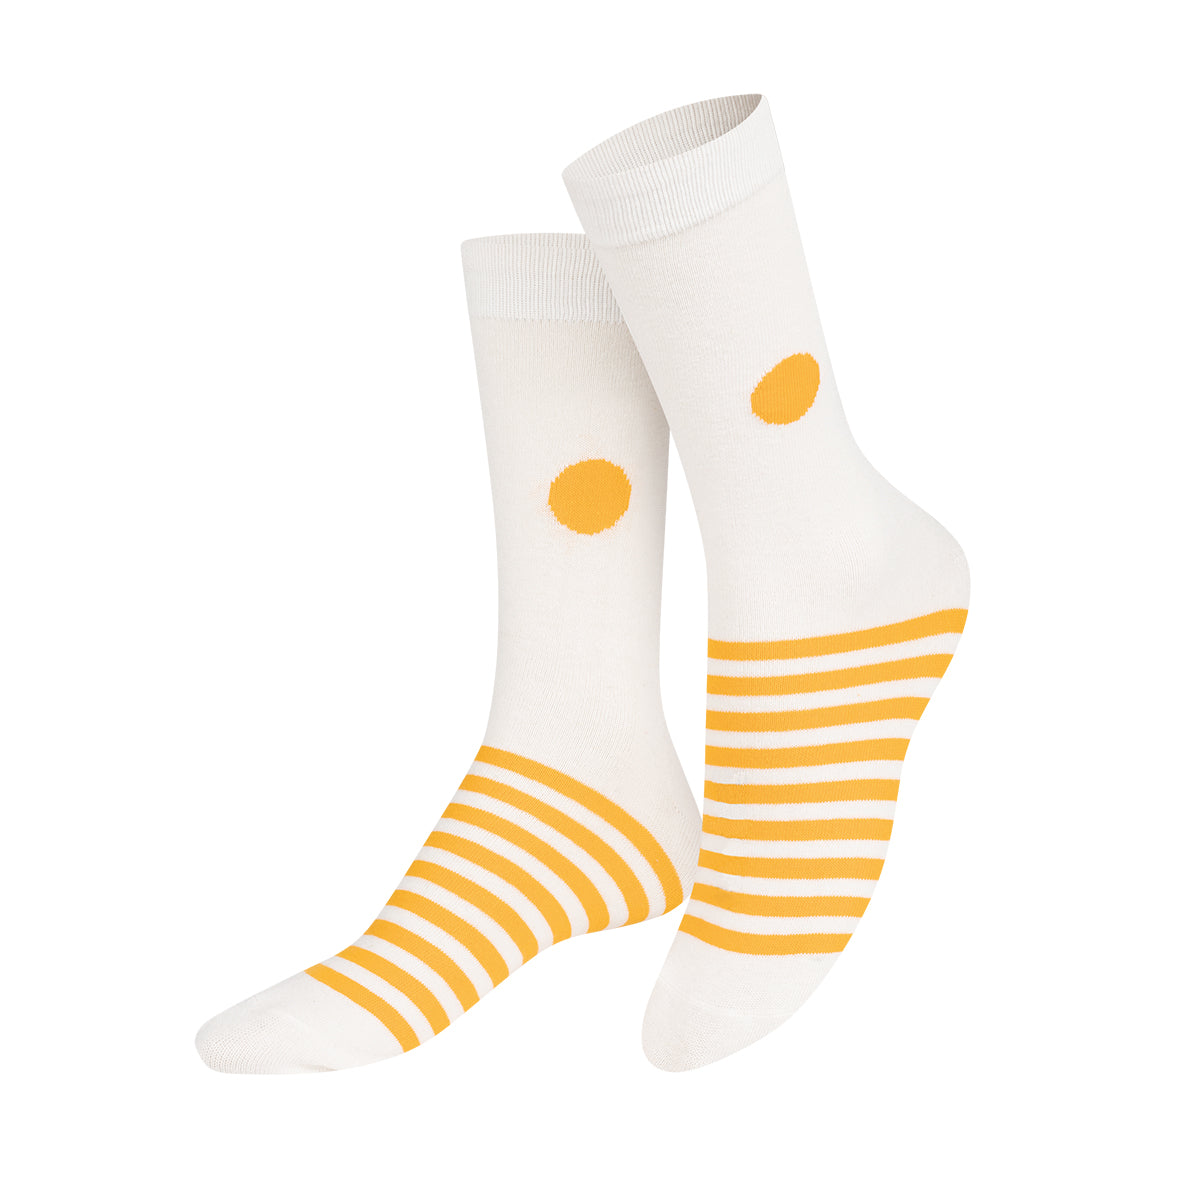 Socks Miso Ramen (2 pairs)